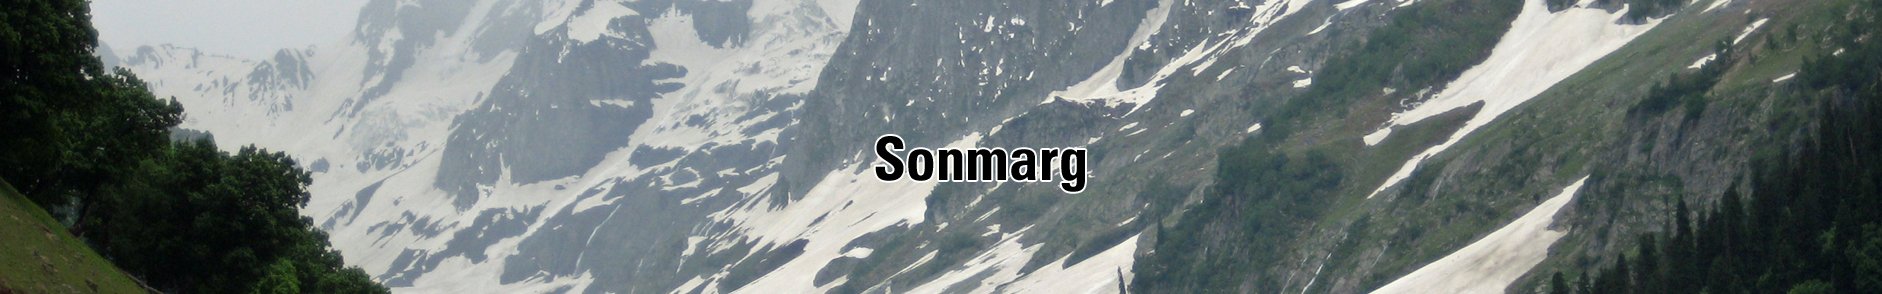 Thajwas Glacier Sonmarg